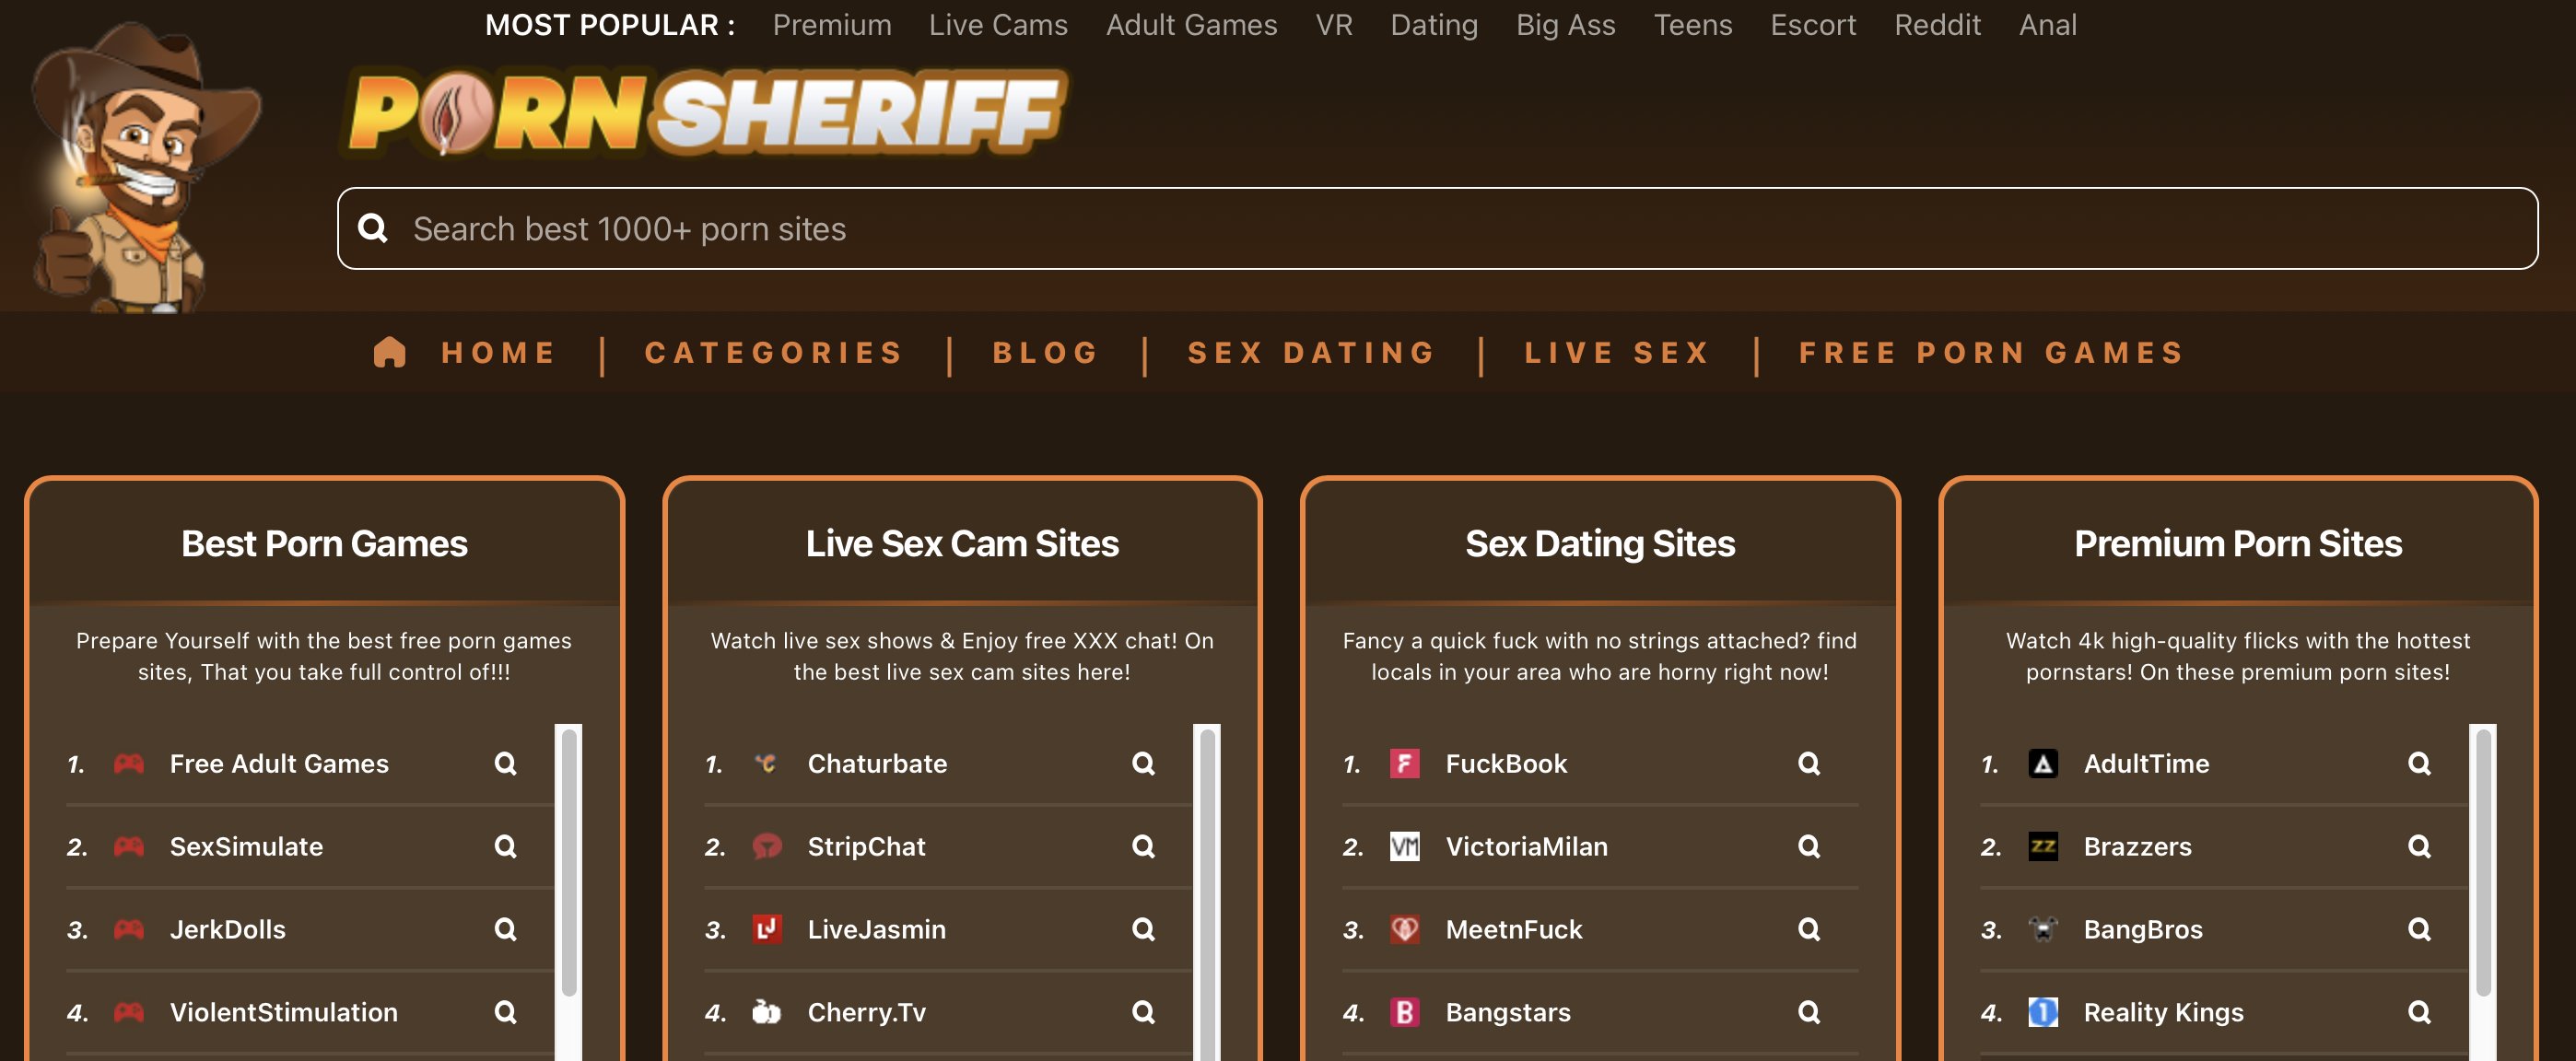 Find The Top Adult Websites On The PornSheriff